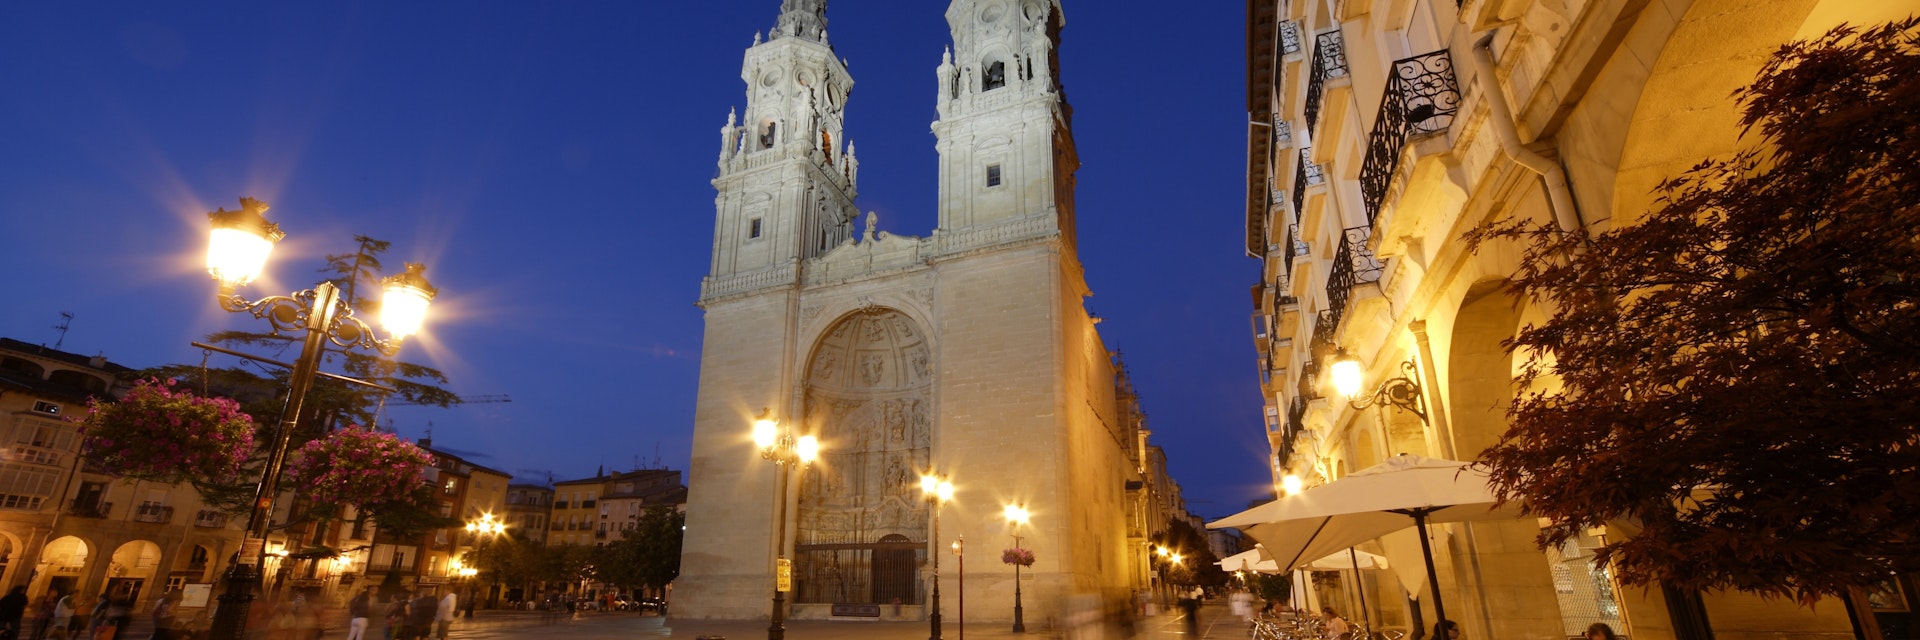 Co-cathedral of Santa Maria de la Redonda, Logrono, La Rioja, Spain